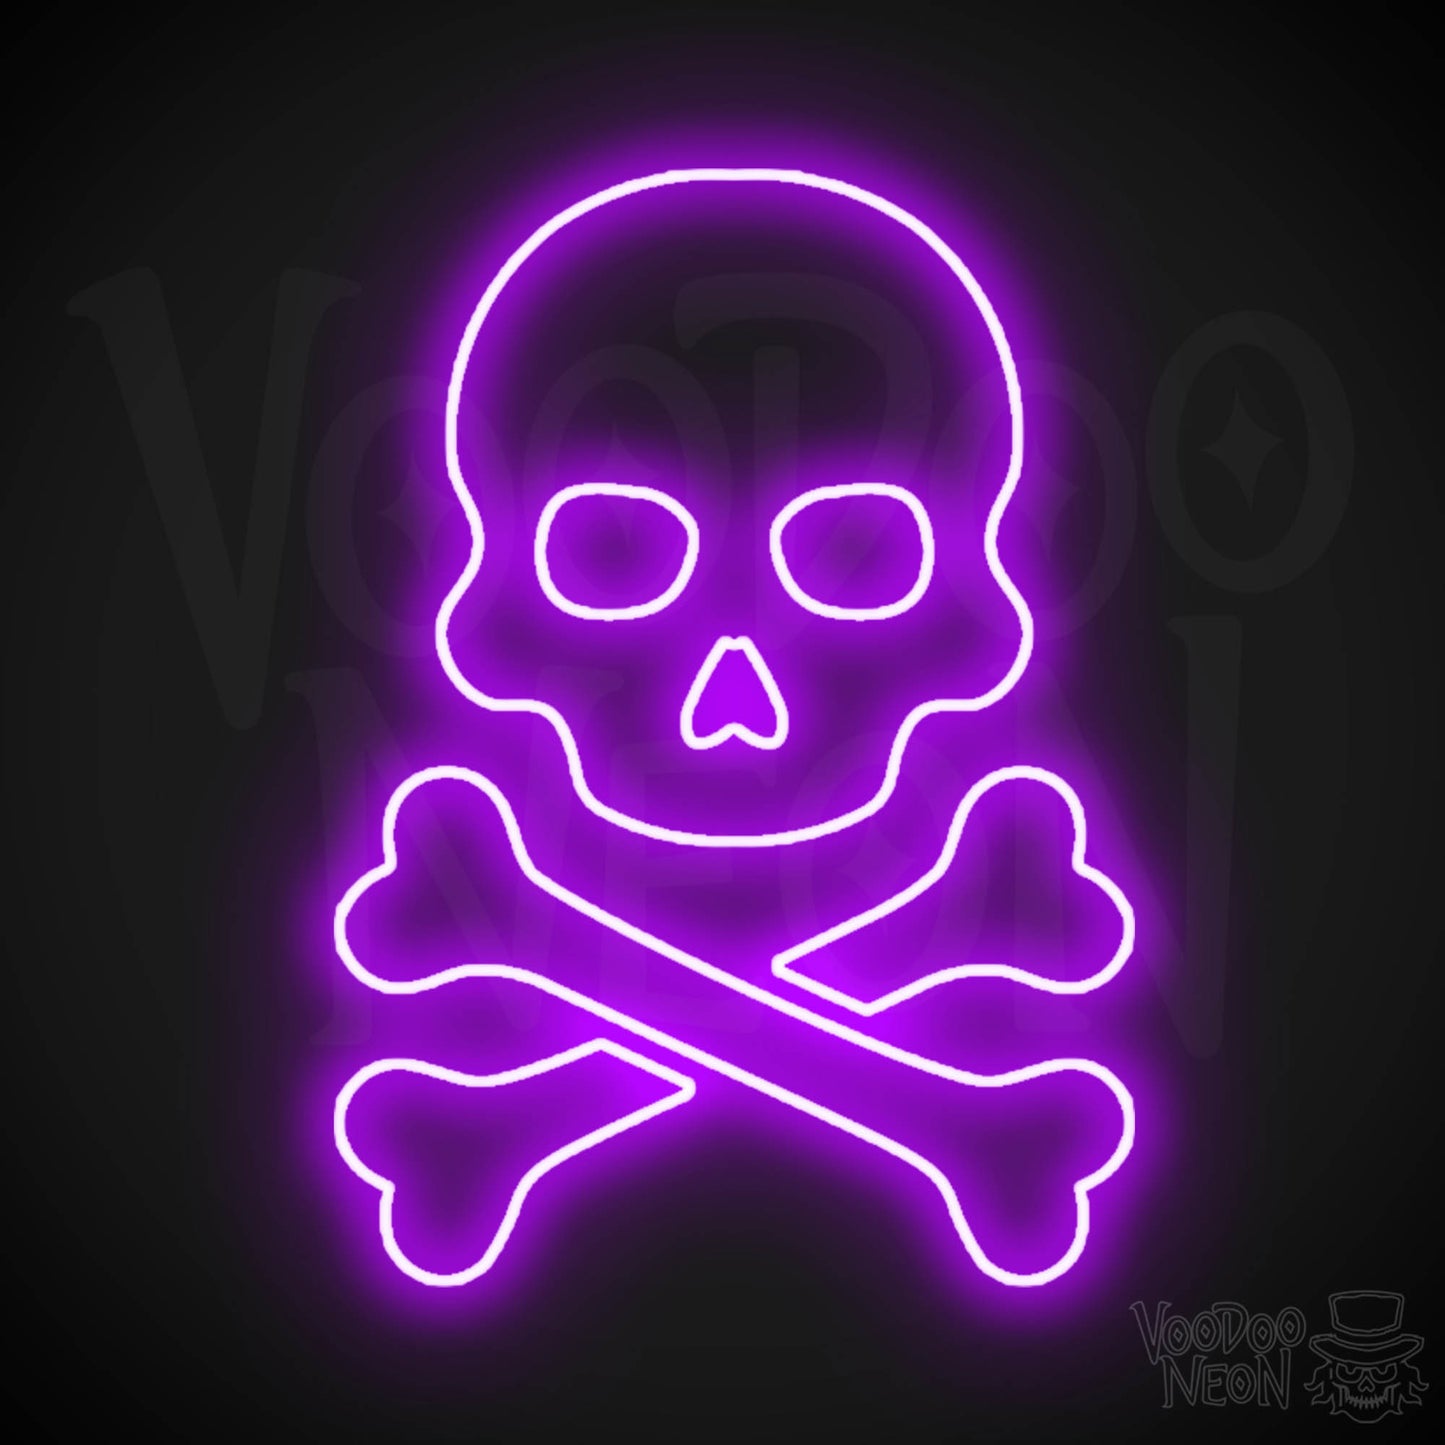 Pirate Skull & Crossbones Neon Sign - Neon Pirate Skull & Crossbones Sign - LED Lights - Color Purple